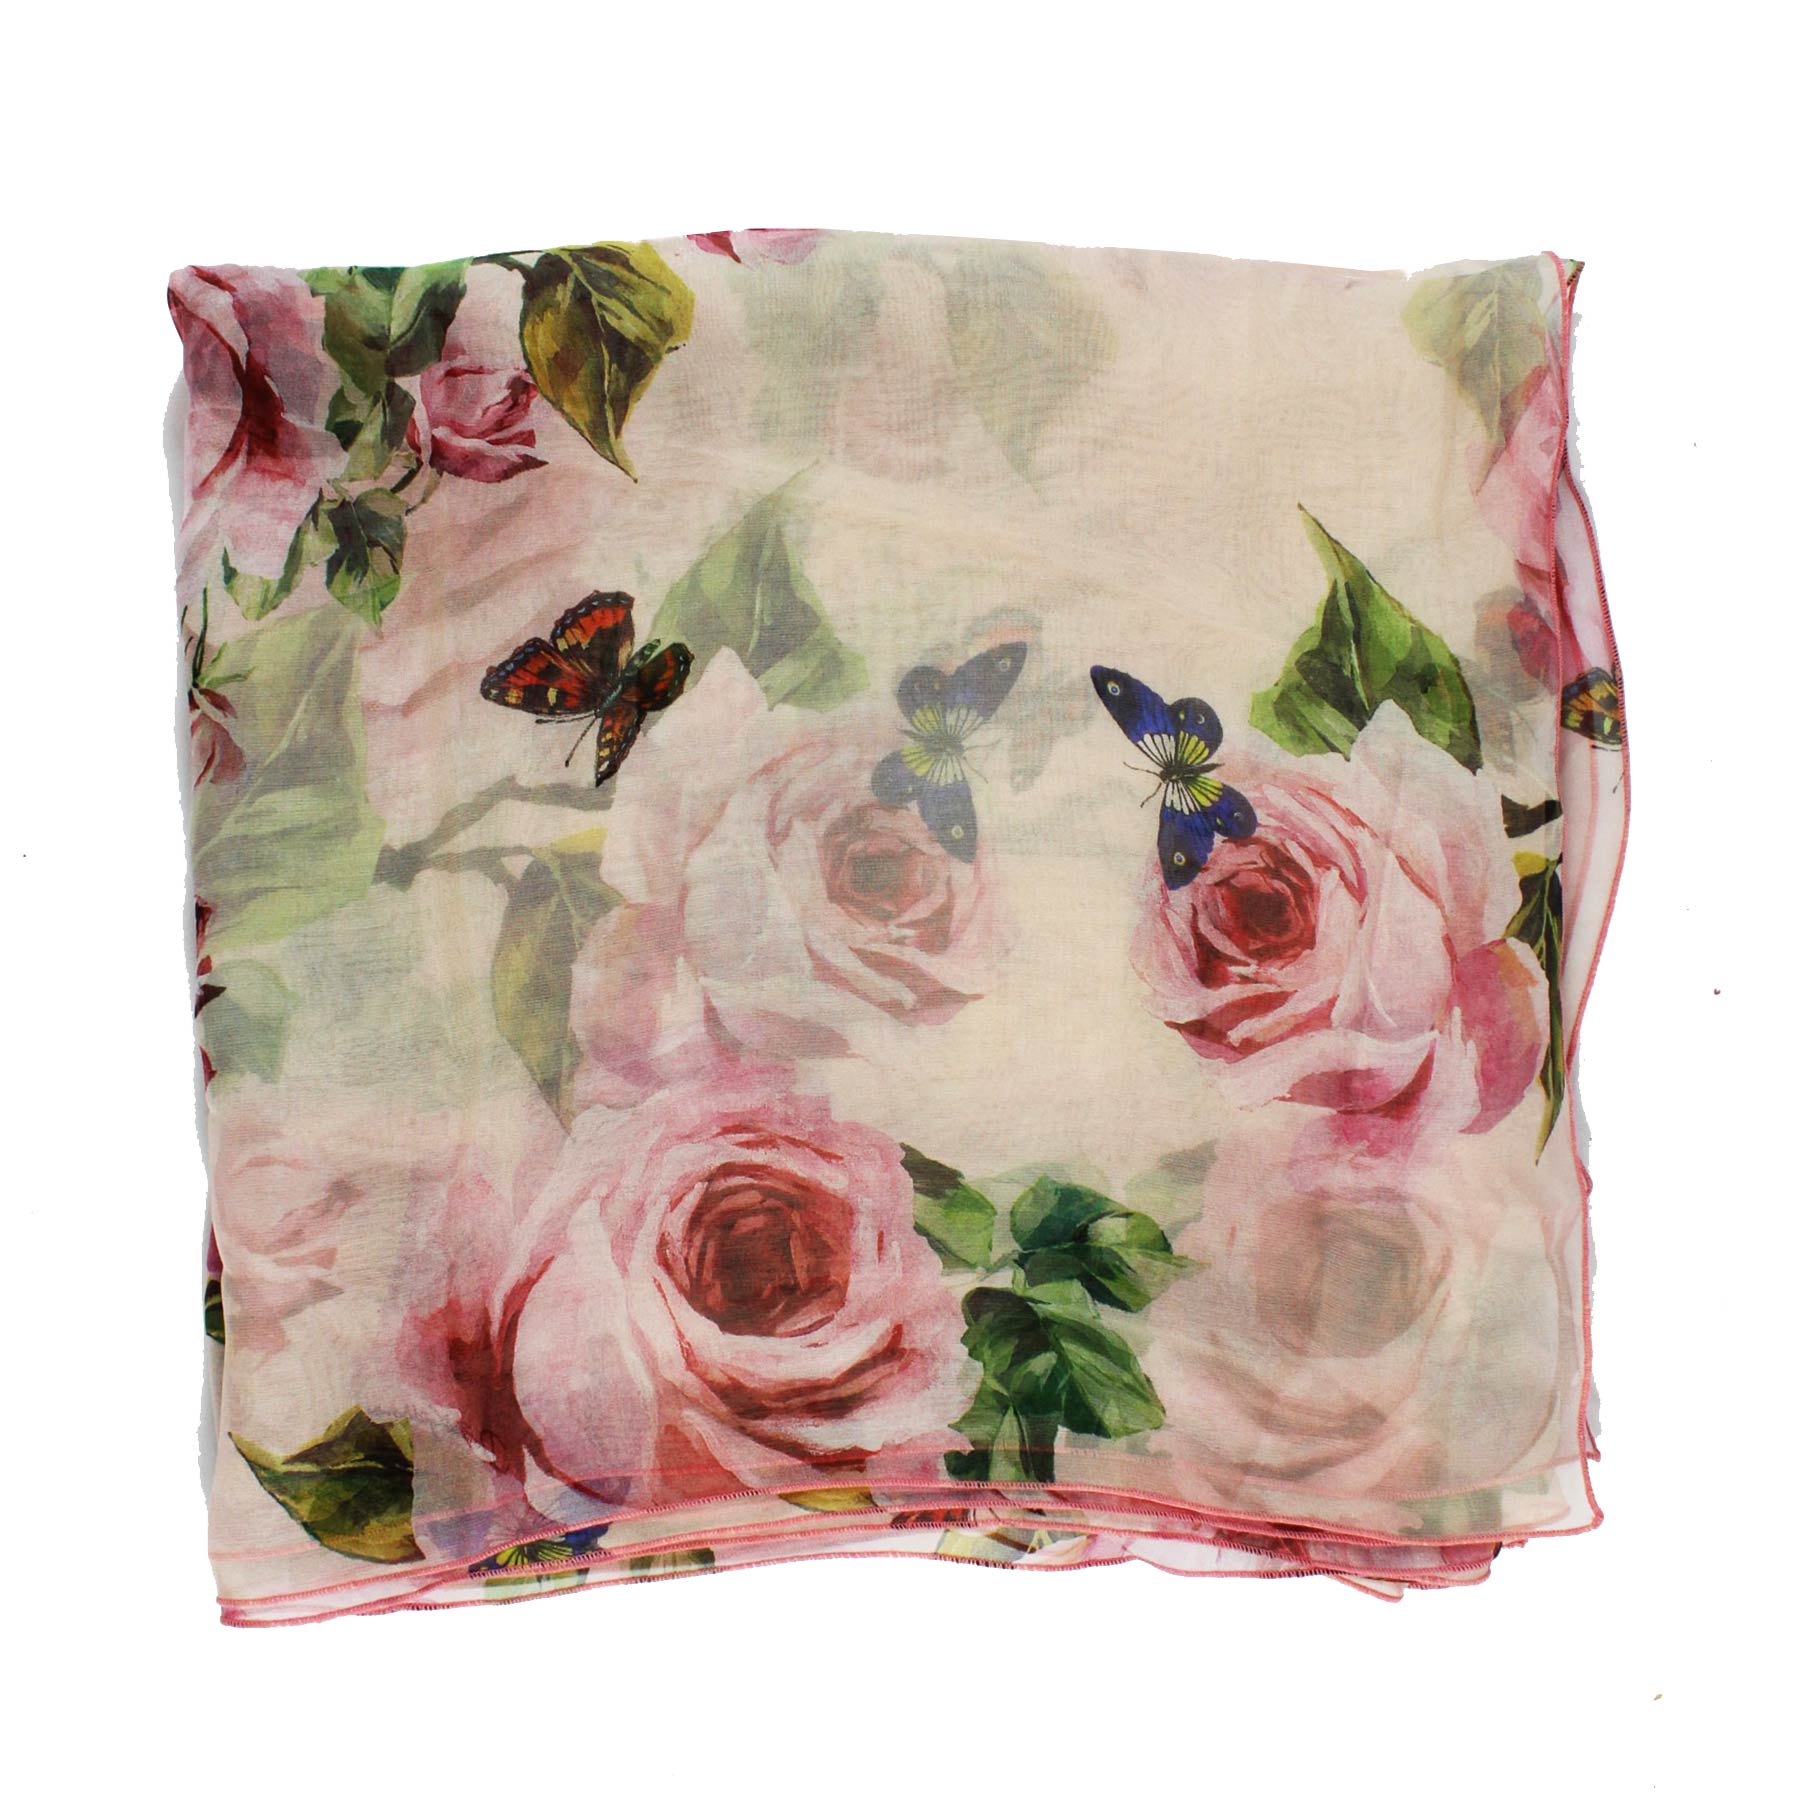 Dolce & Gabbana Scarf Pink Roses & Butterflies - Extra Long Chiffon Silk Shawl